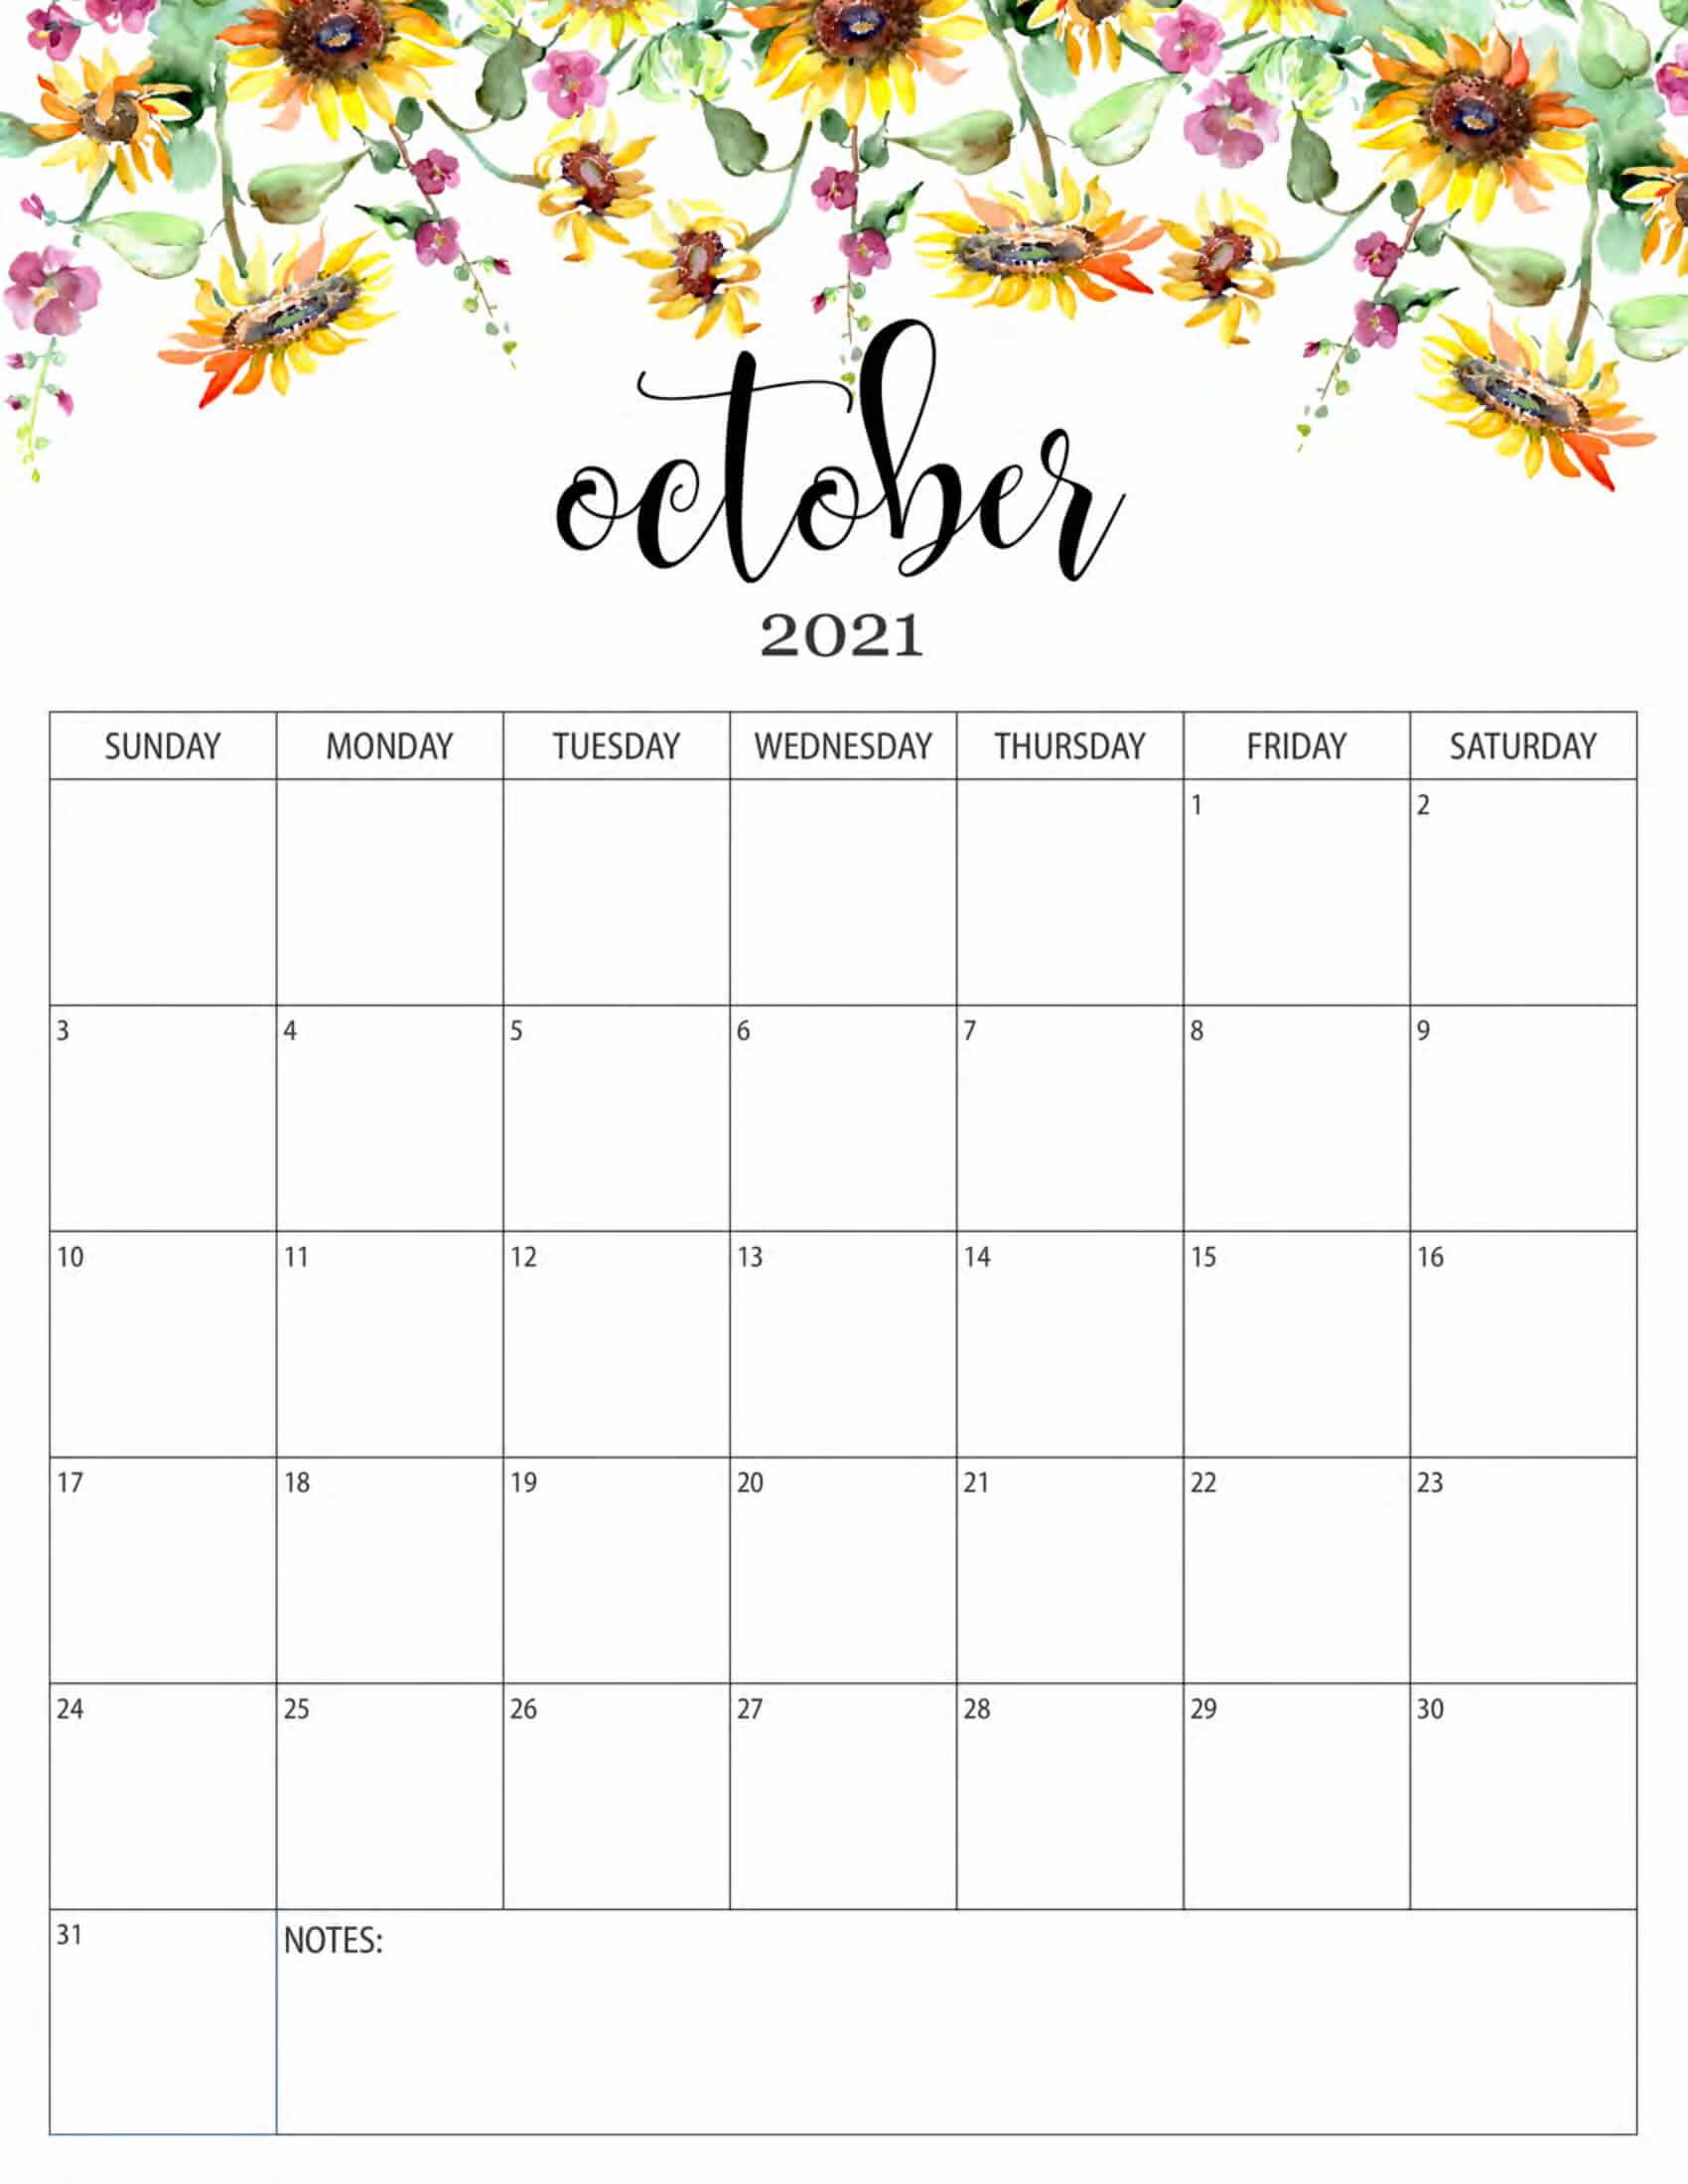 October 2021 Calendar Floral